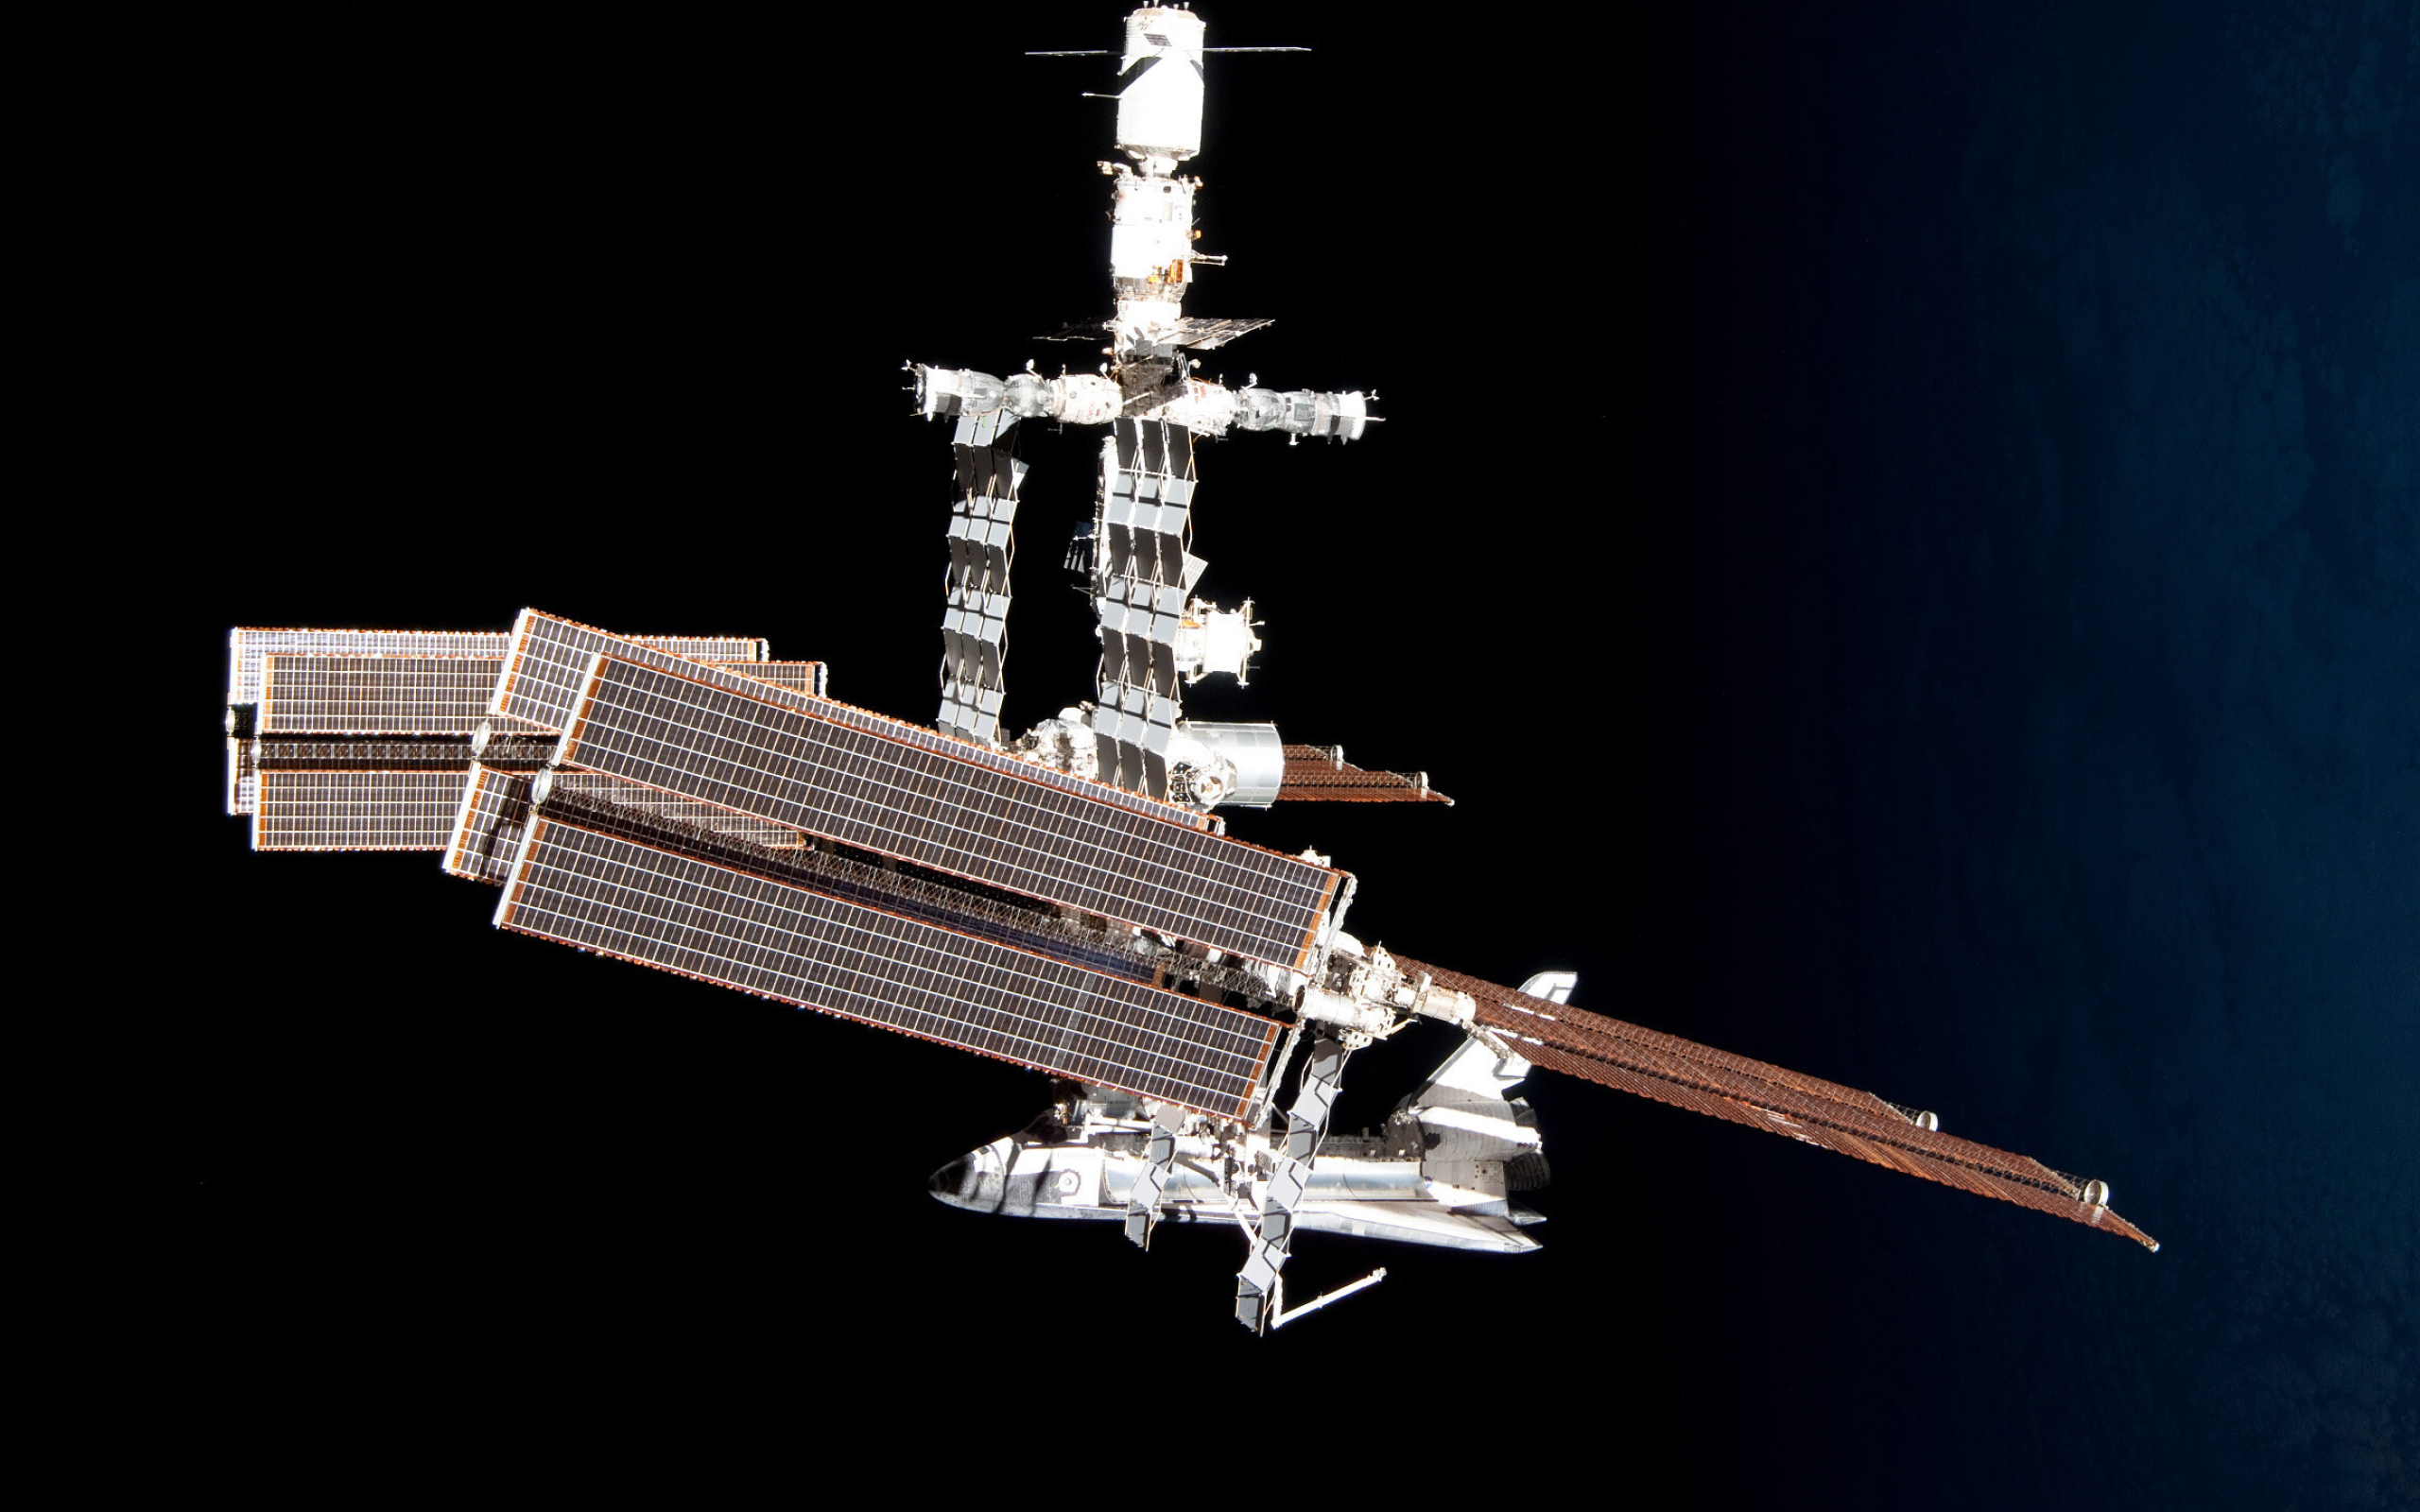 International Space Station, 2560x1600 wallpaper, 066, 2560x1600 HD Desktop